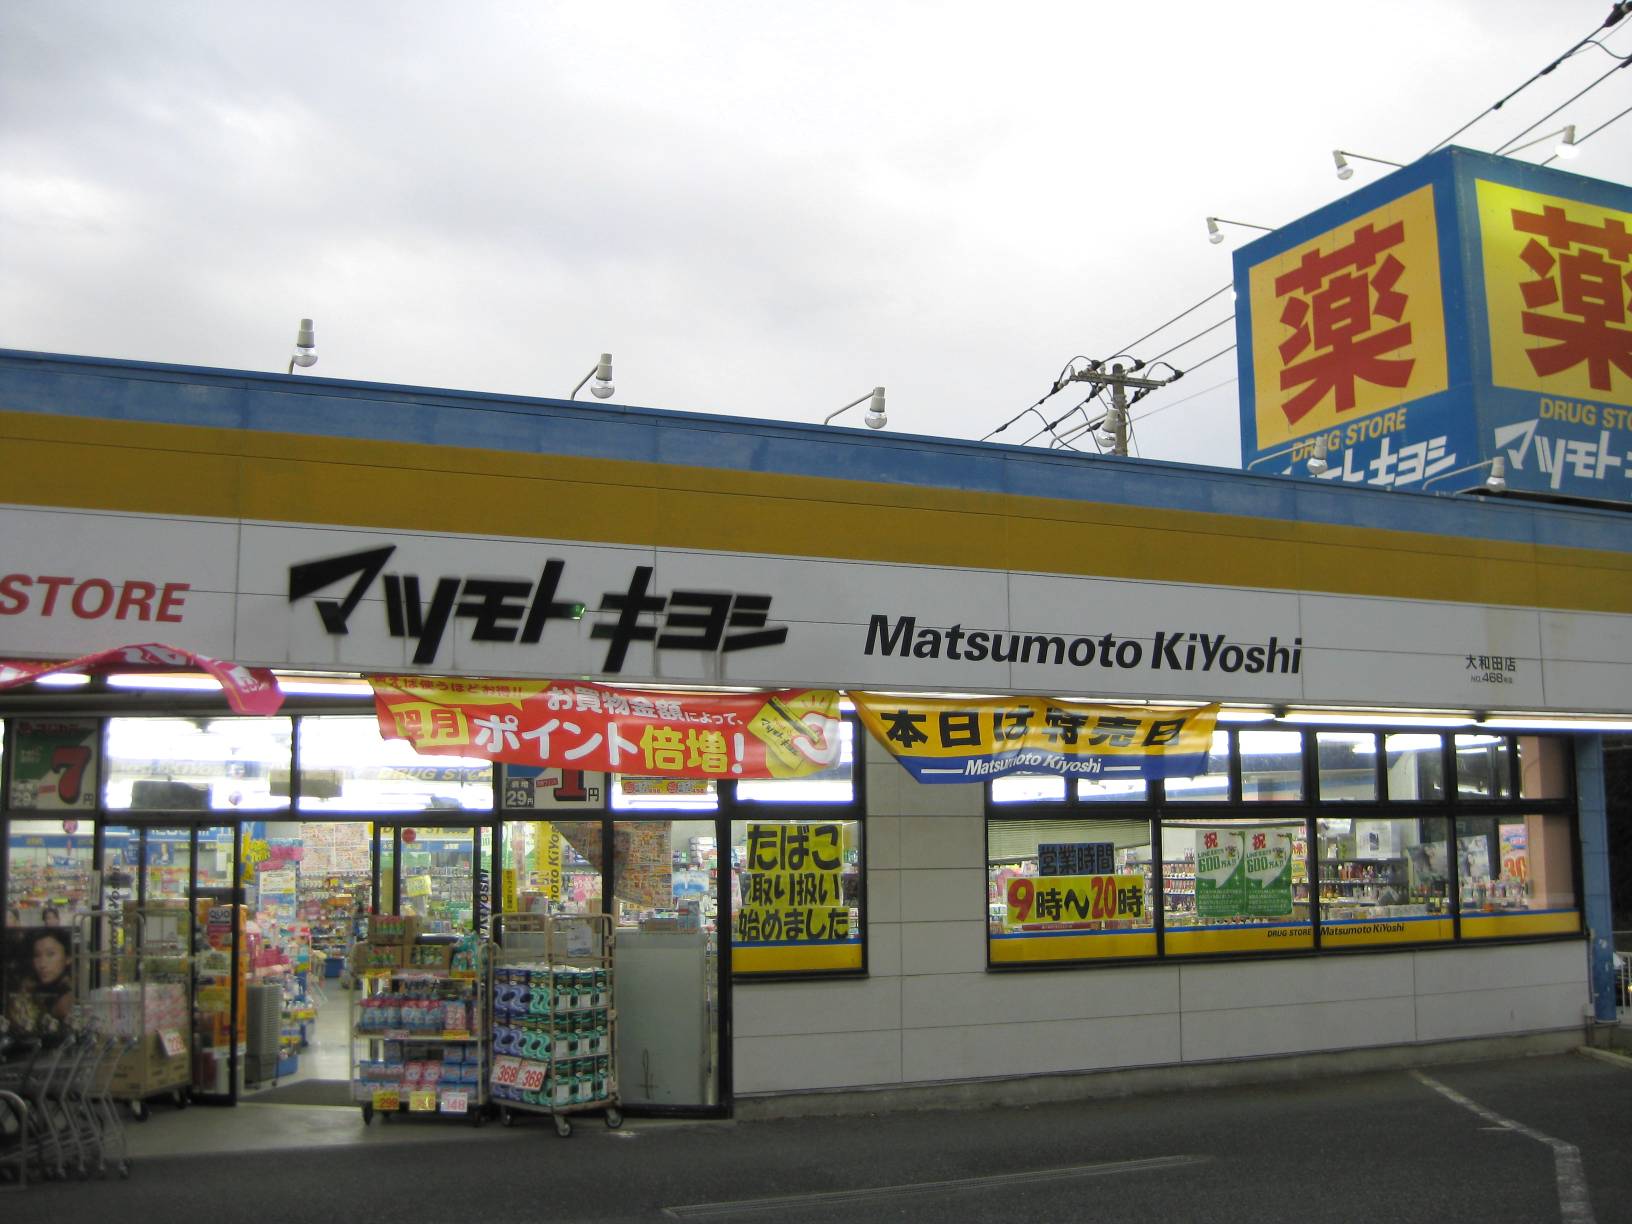 Dorakkusutoa. Drugstore Matsumotokiyoshi Owada store 497m to (drugstore)